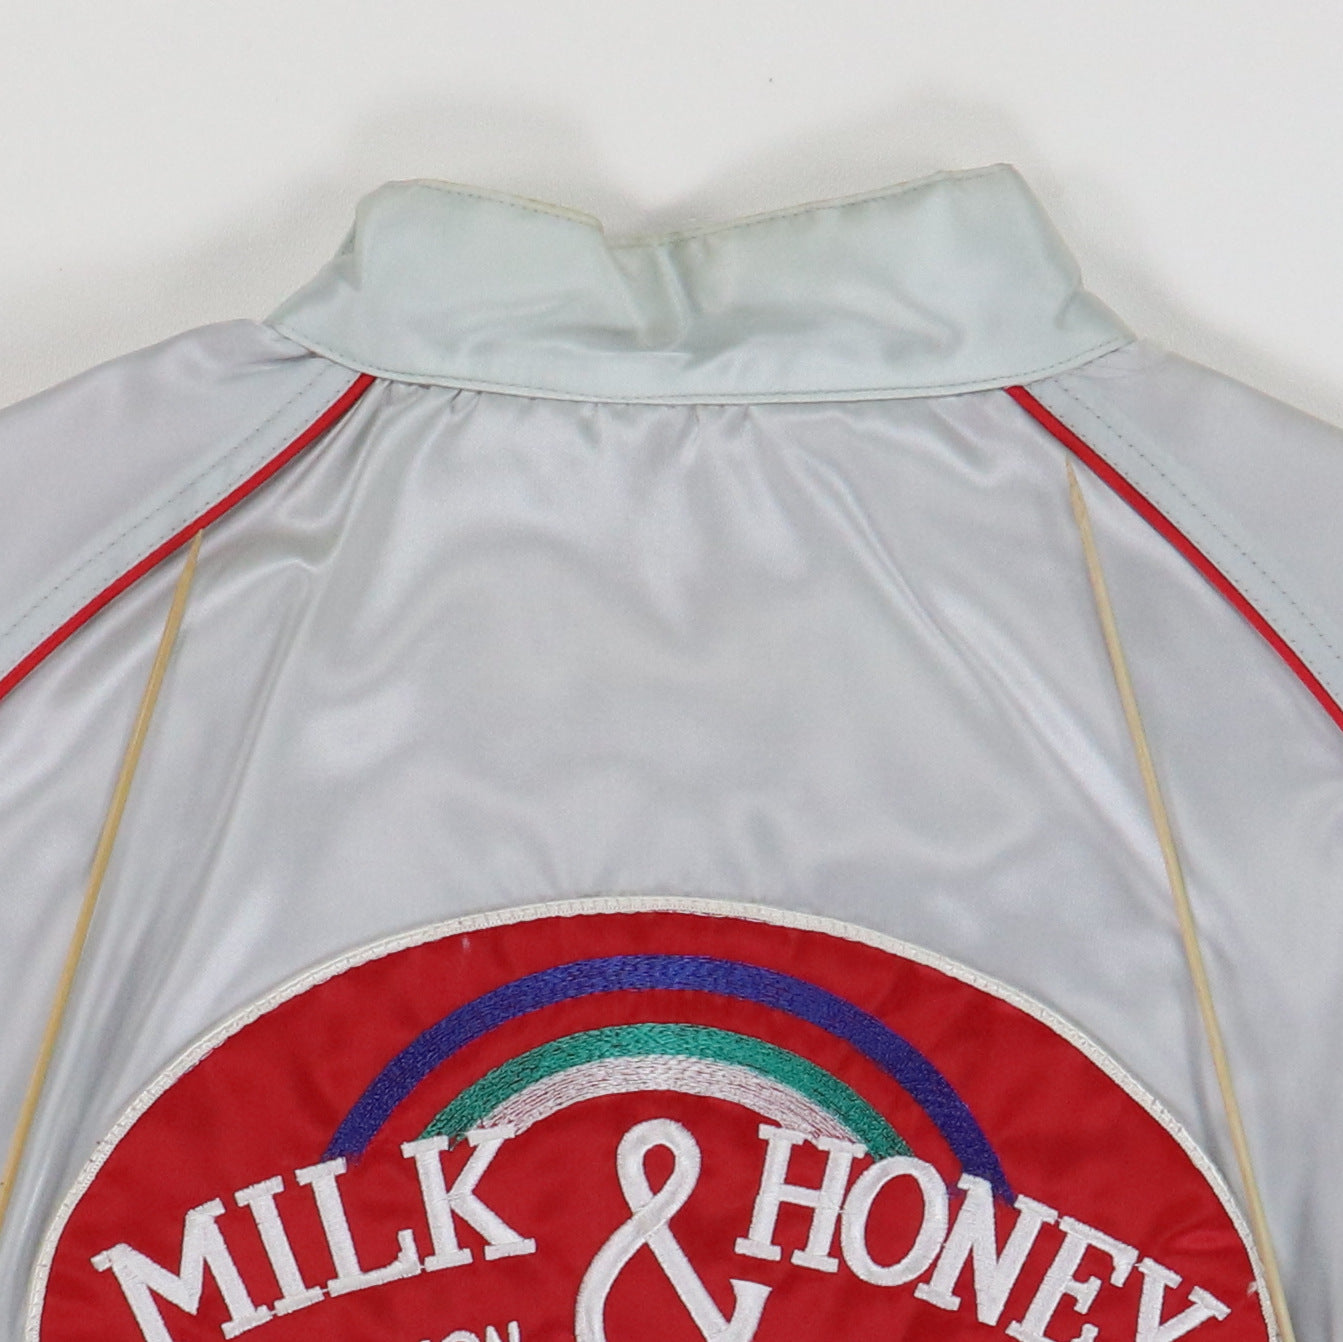 1984 John Lennon Yoko Ono Milk & Honey Promo Jacket